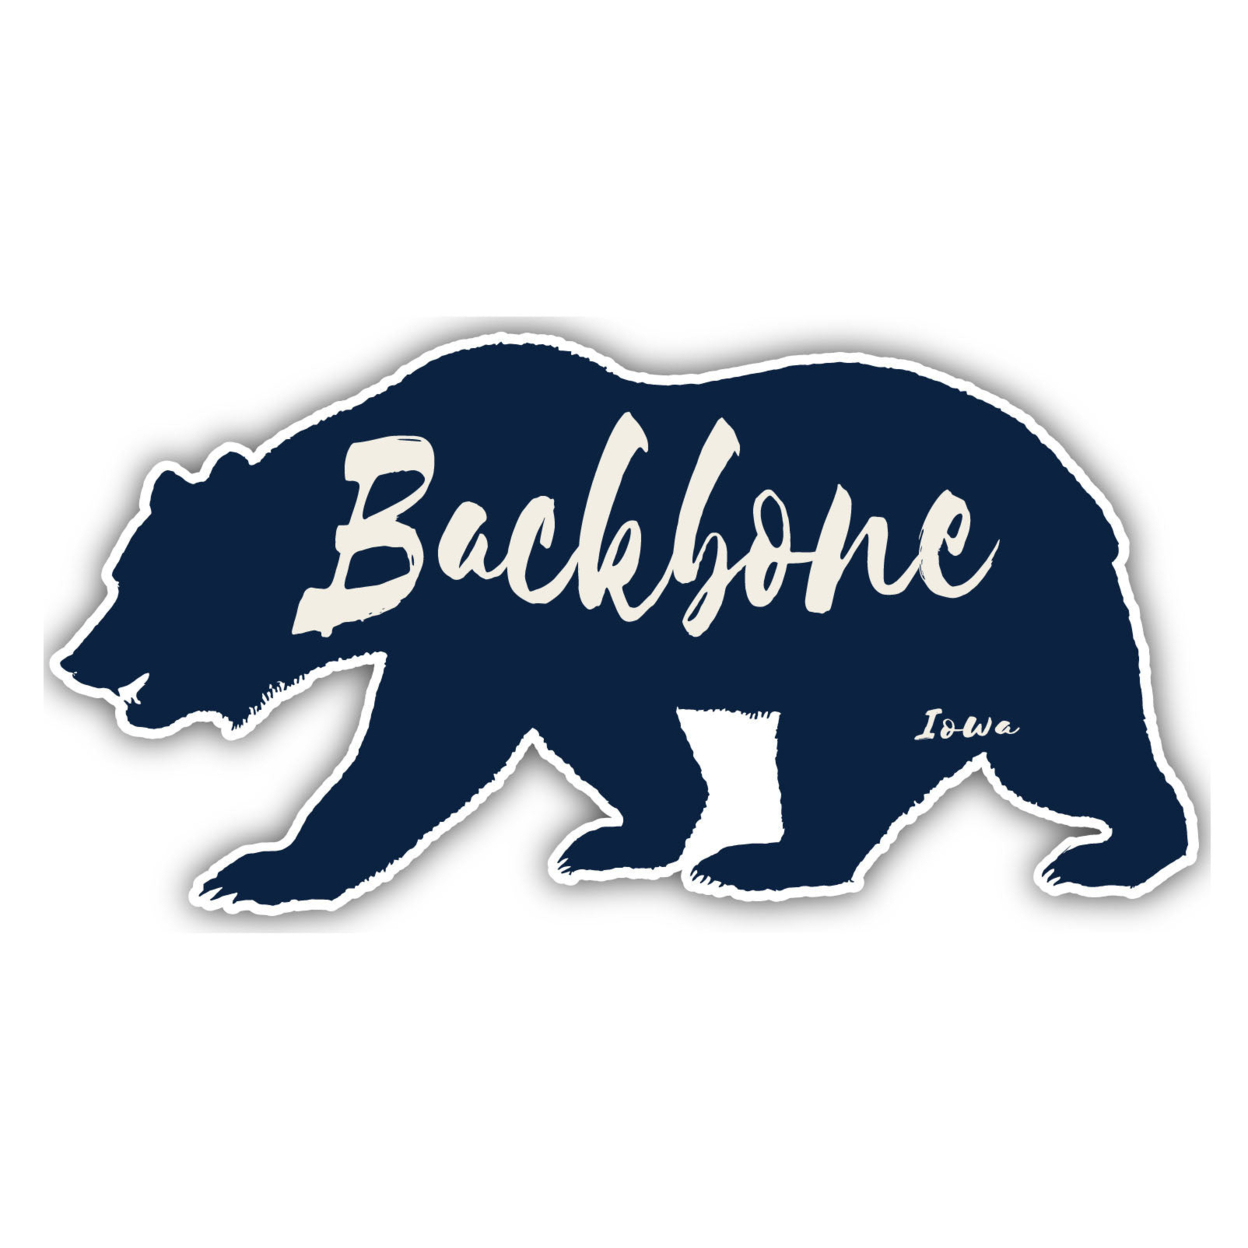 Backbone Iowa Souvenir Decorative Stickers (Choose Theme And Size) - 4-Pack, 2-Inch, Bear